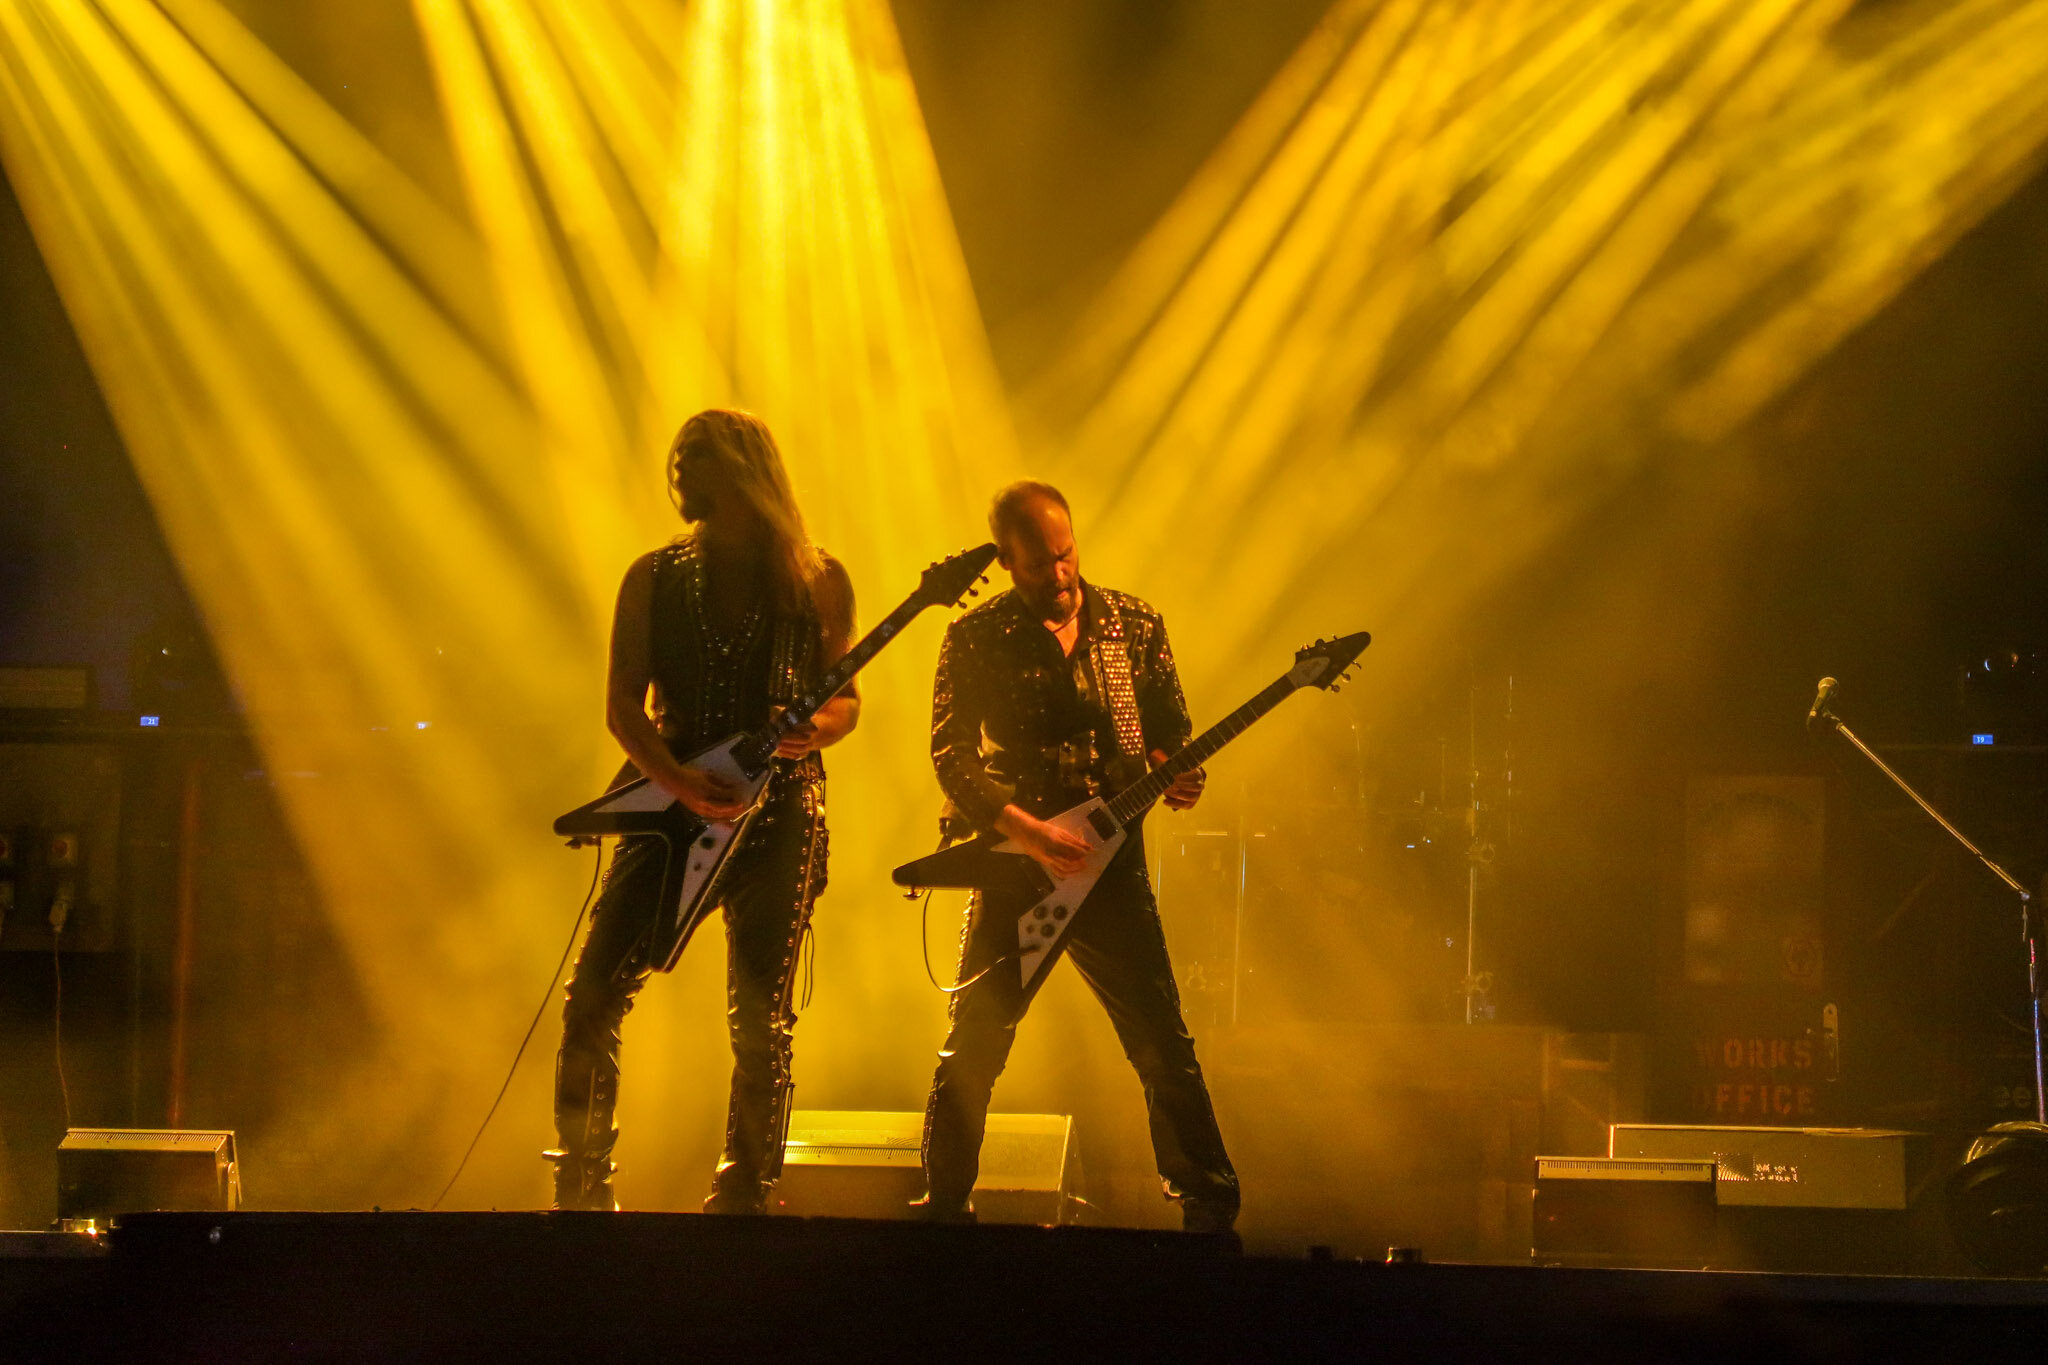 Judas Priest at Bloodstock Open Air Festival 2021